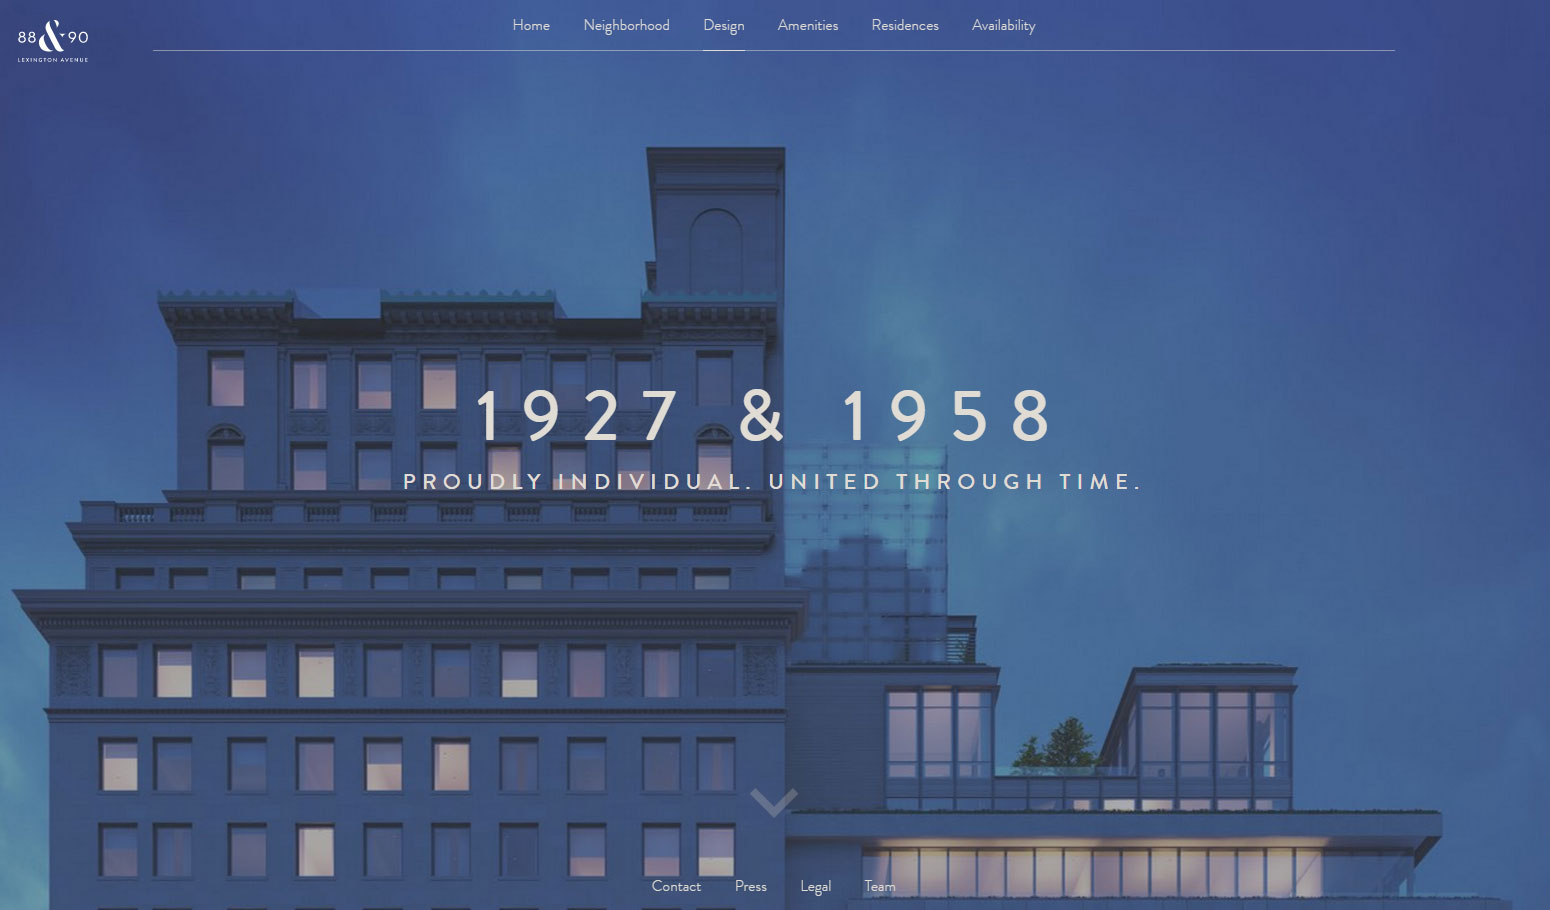 88 & 90 Lexington Avenue - Website of the Day